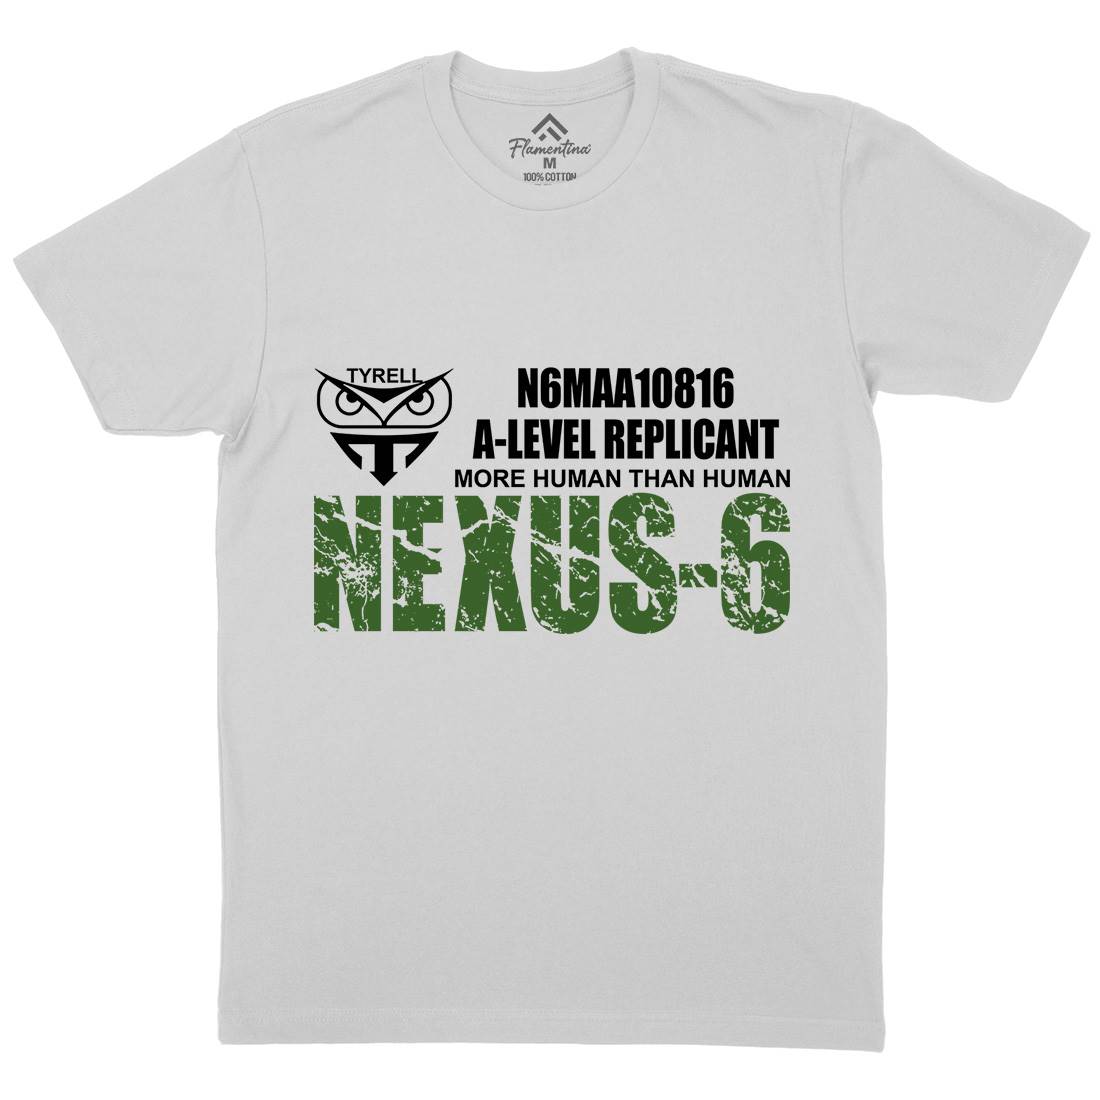 Nexus-6 Mens Crew Neck T-Shirt Space D434